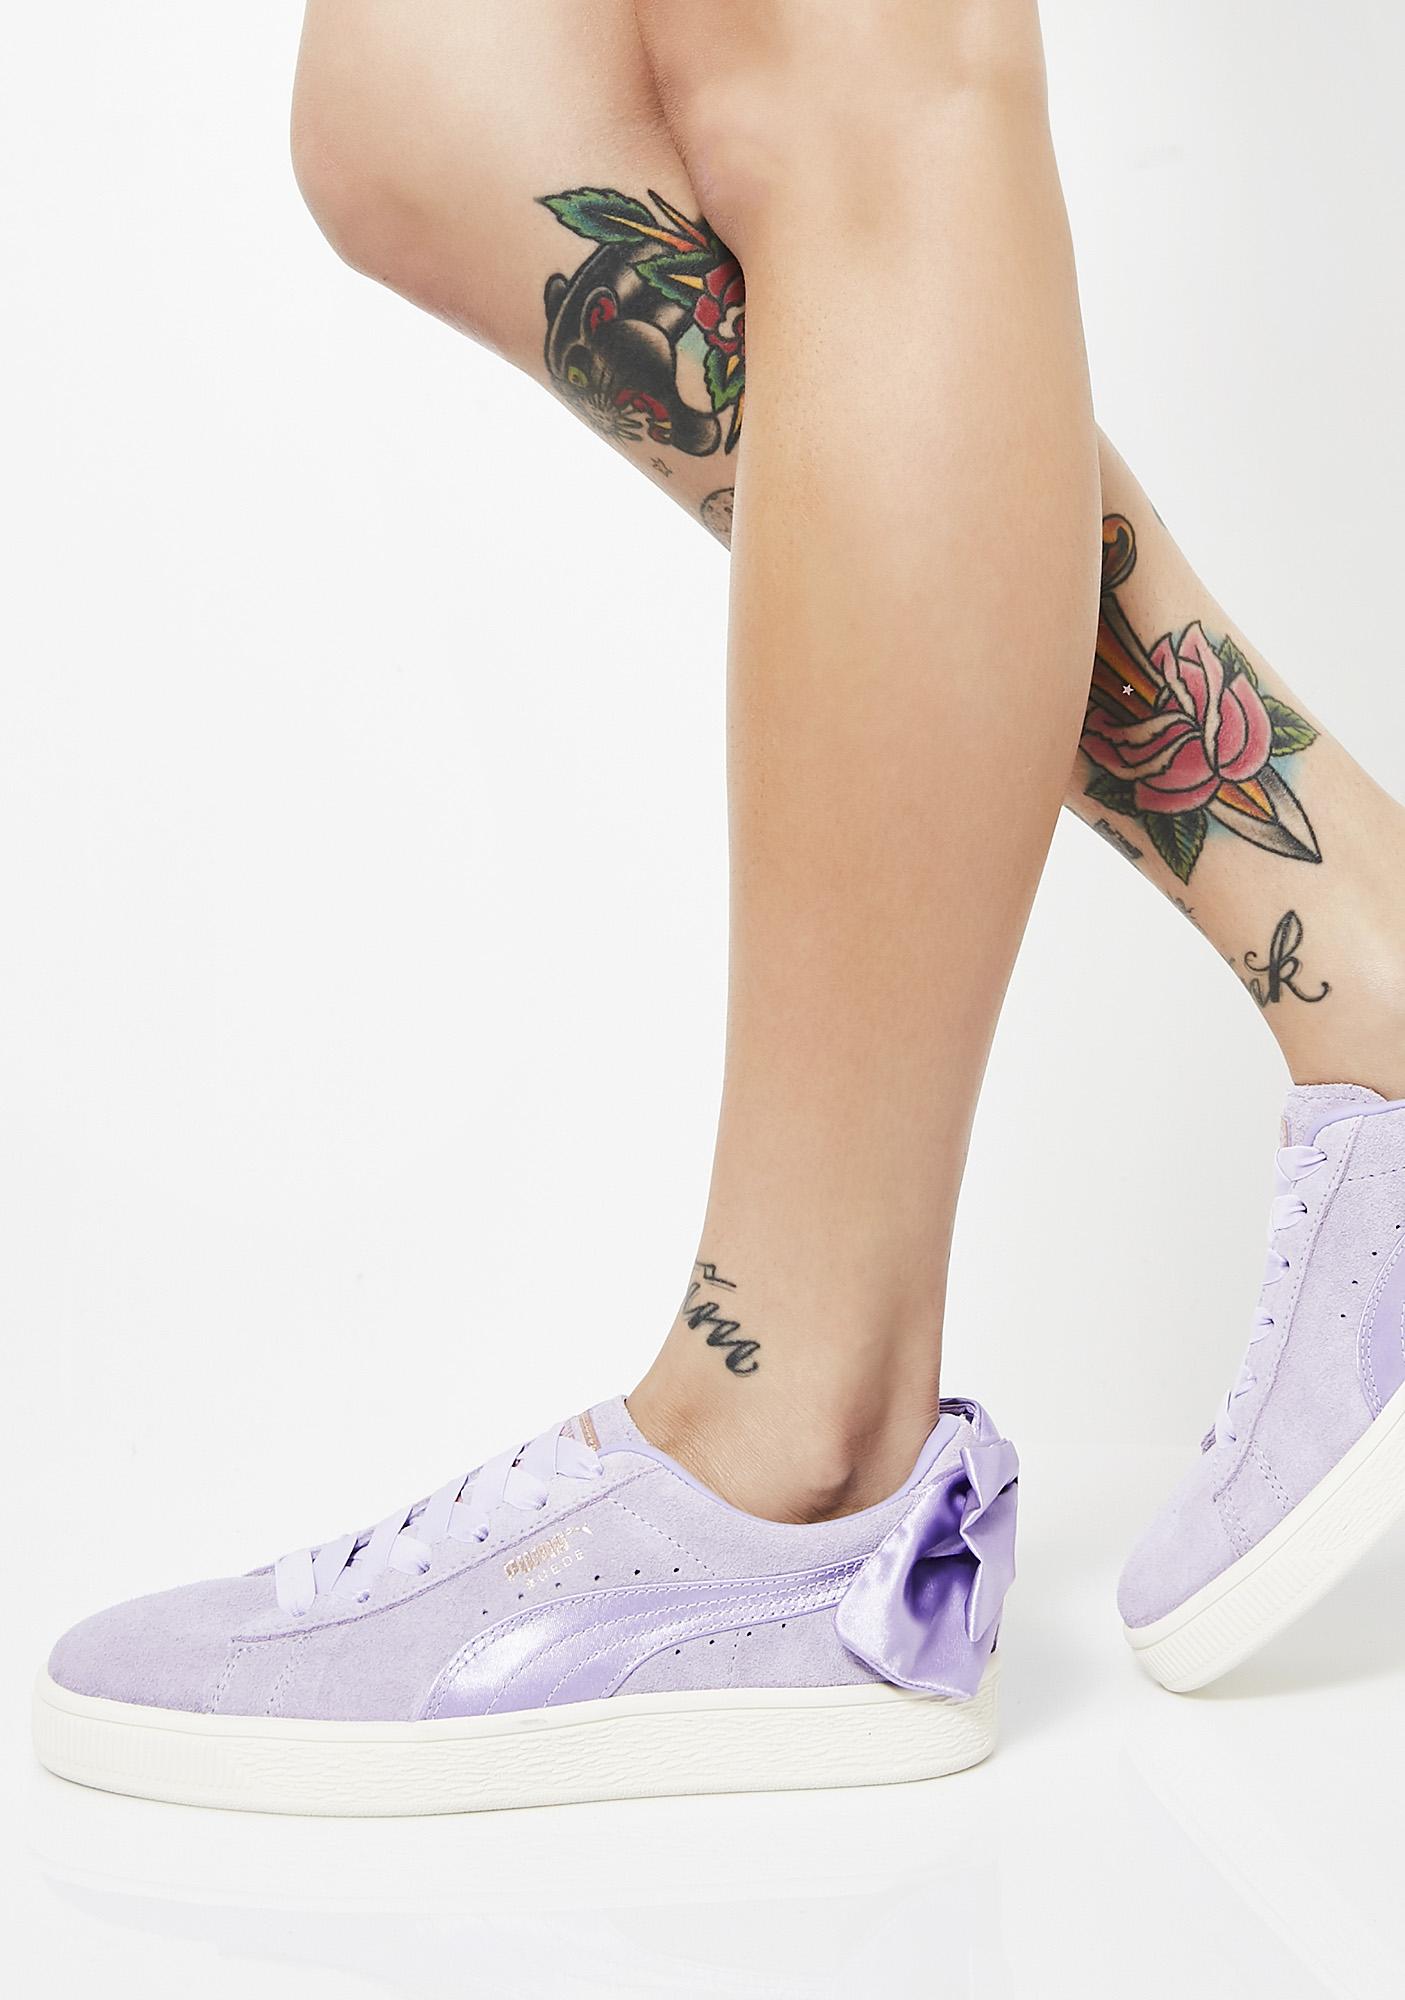 puma purple suede sneakers